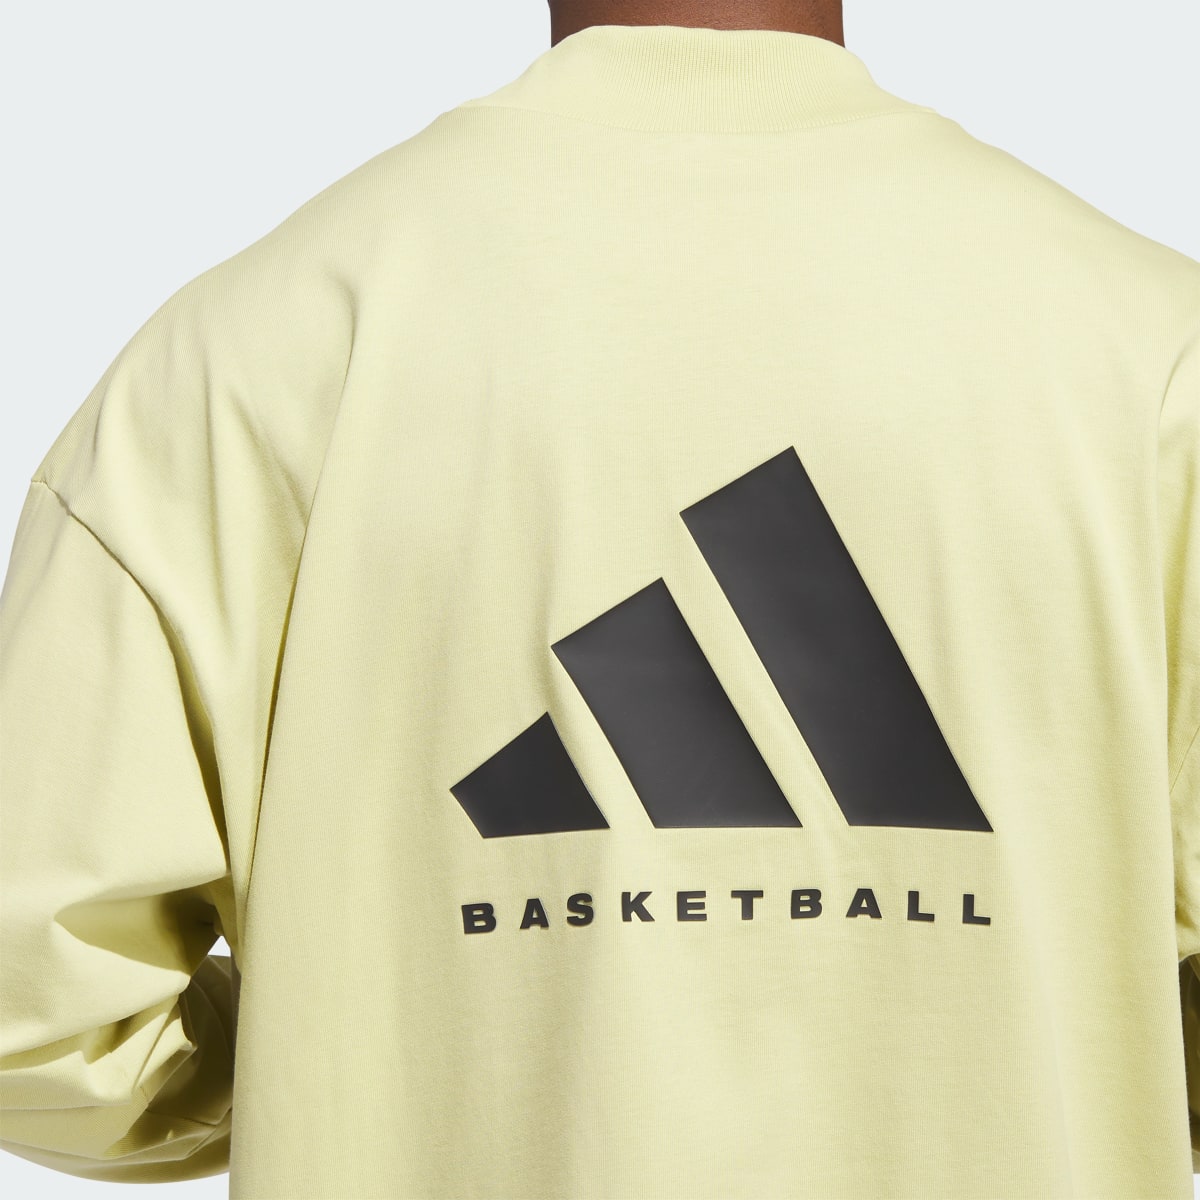 Adidas Basketball Long Sleeve Tee. 7